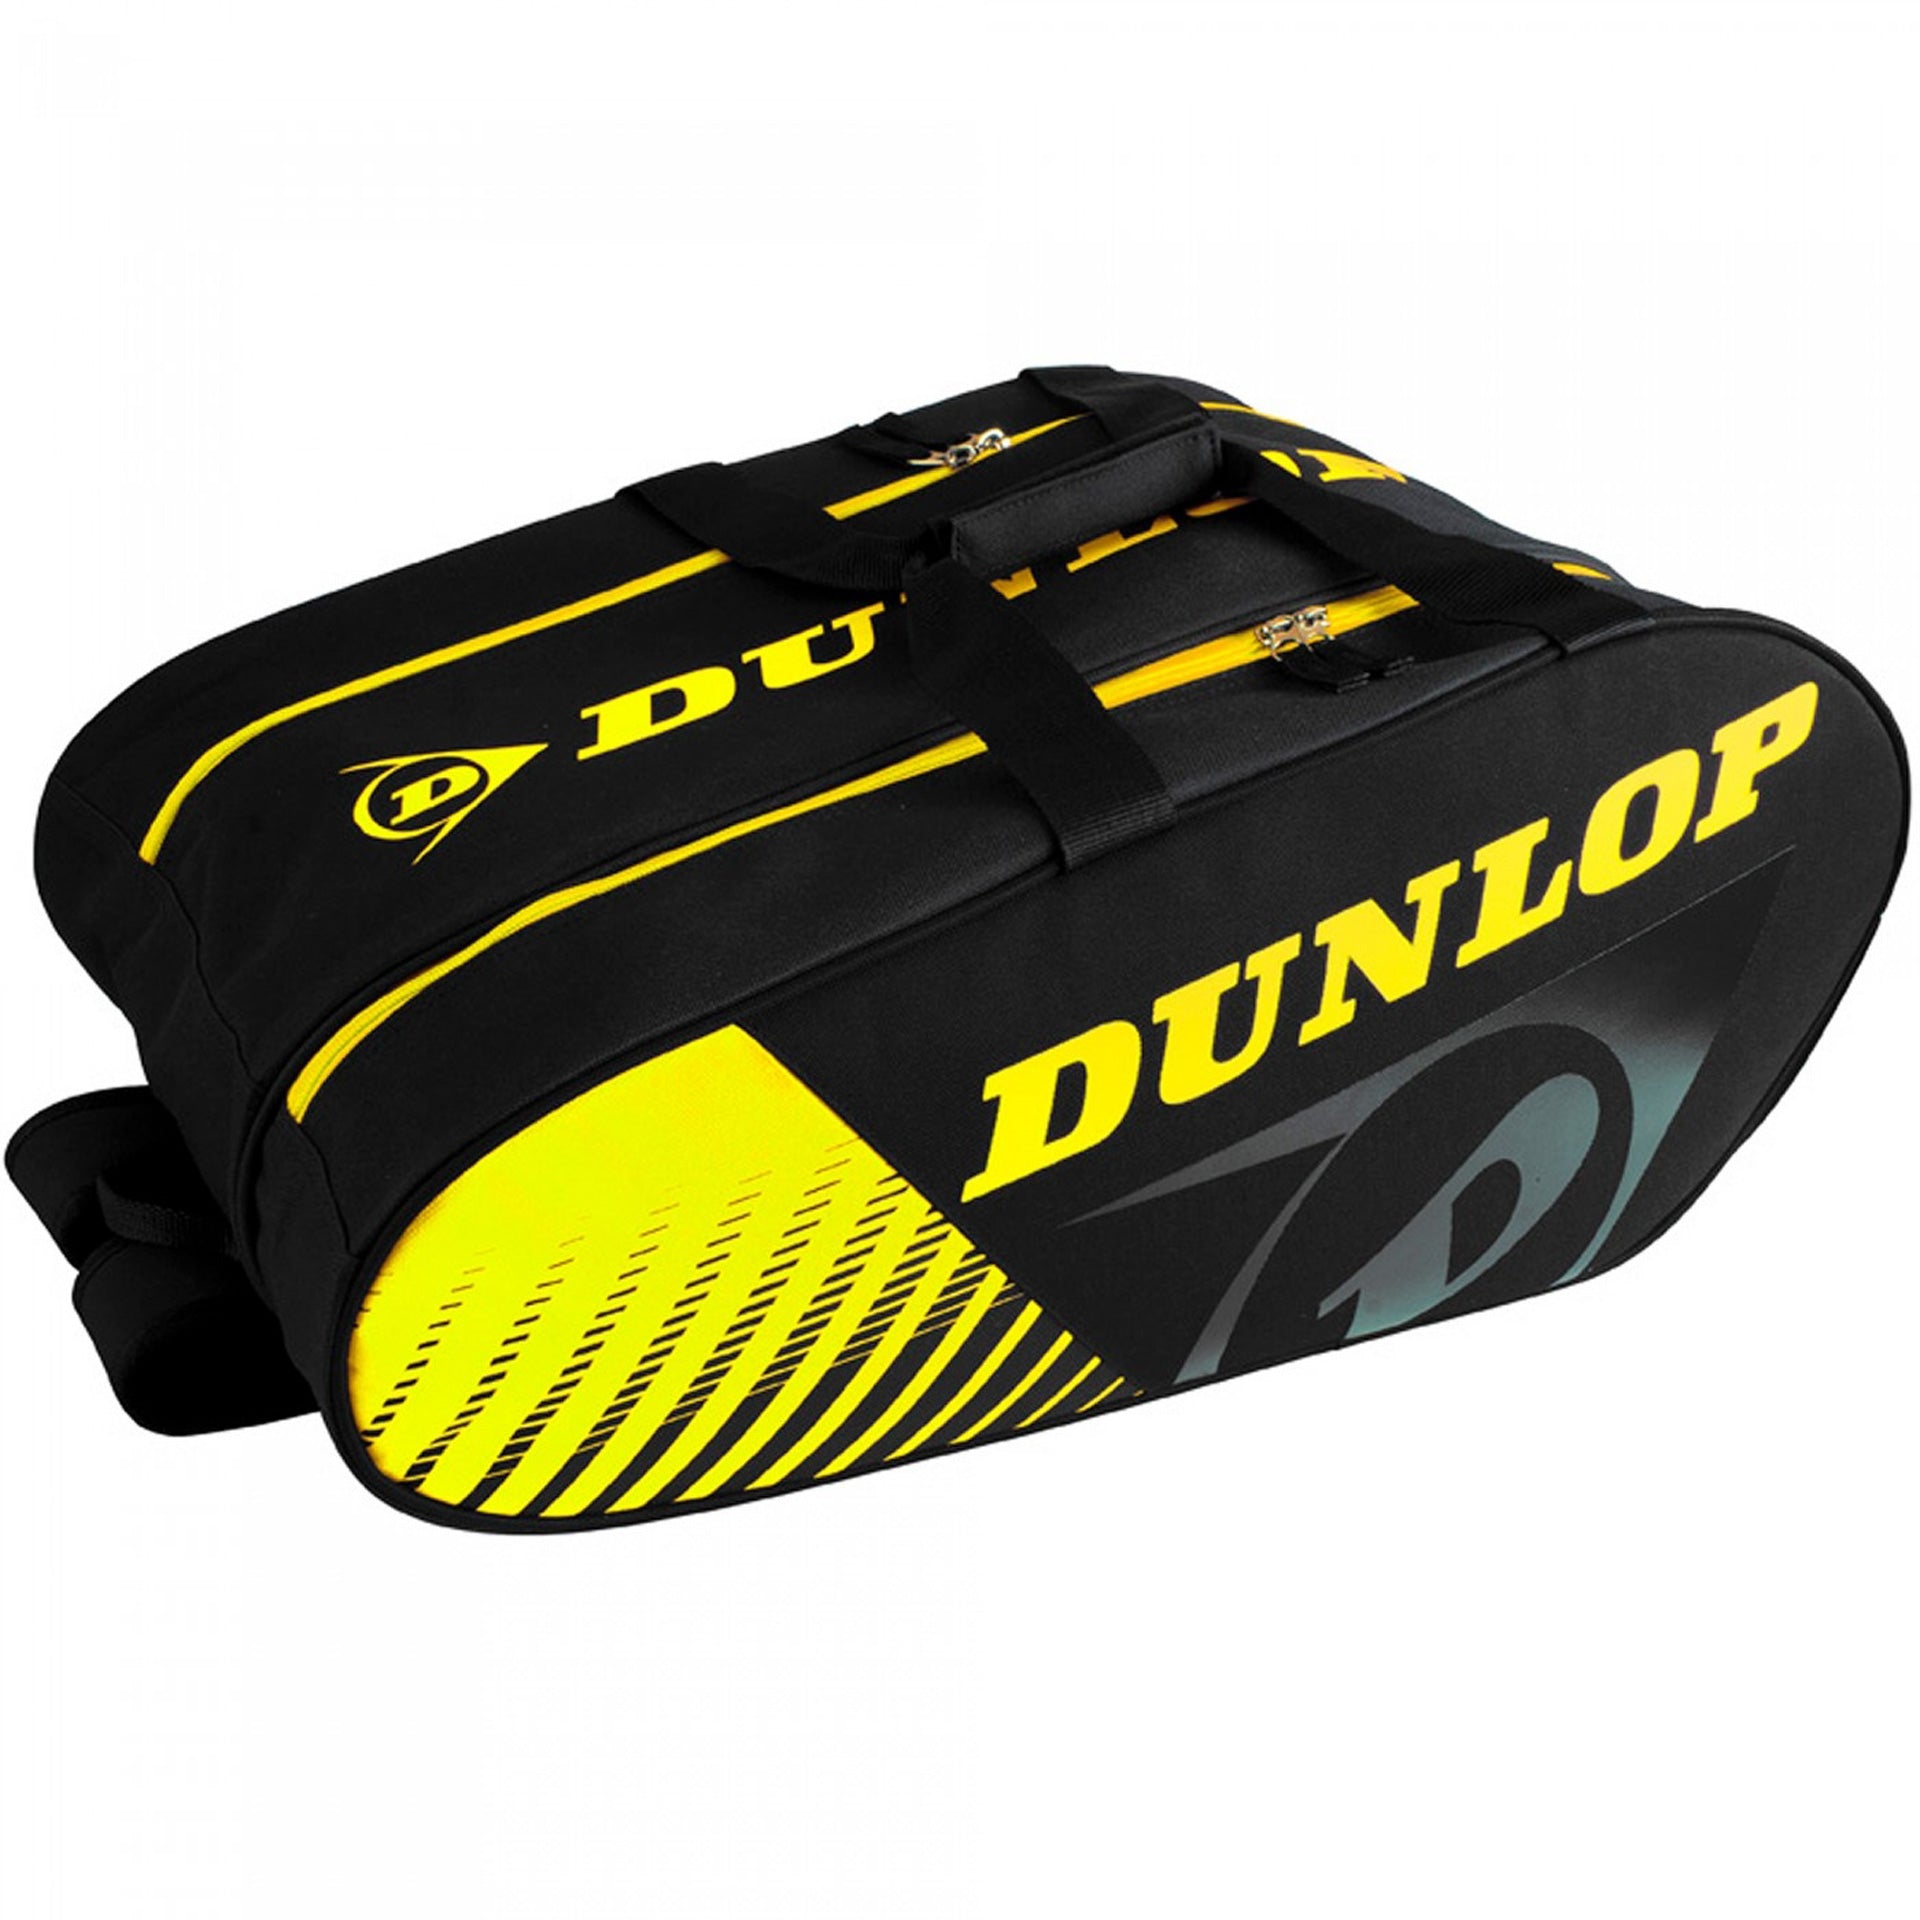 Paletero Dunlop Play Black/yellow UNICA 2